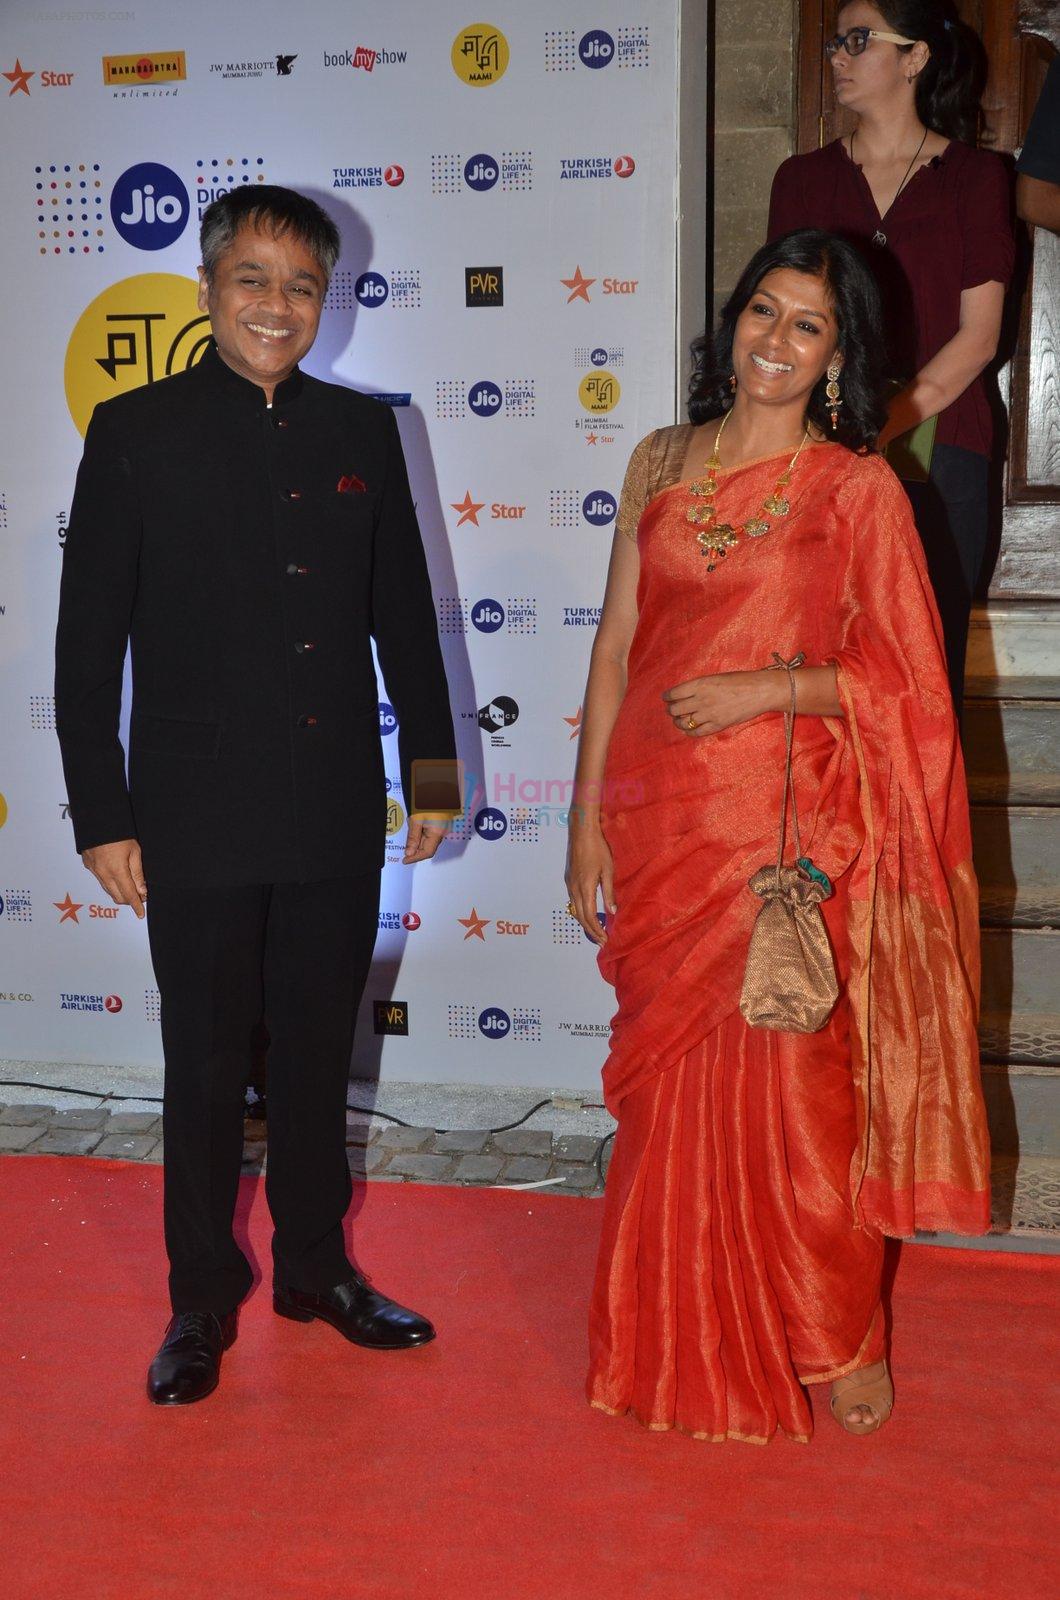 Nandita Das at MAMI Film Festival 2016 on 20th Oct 2016